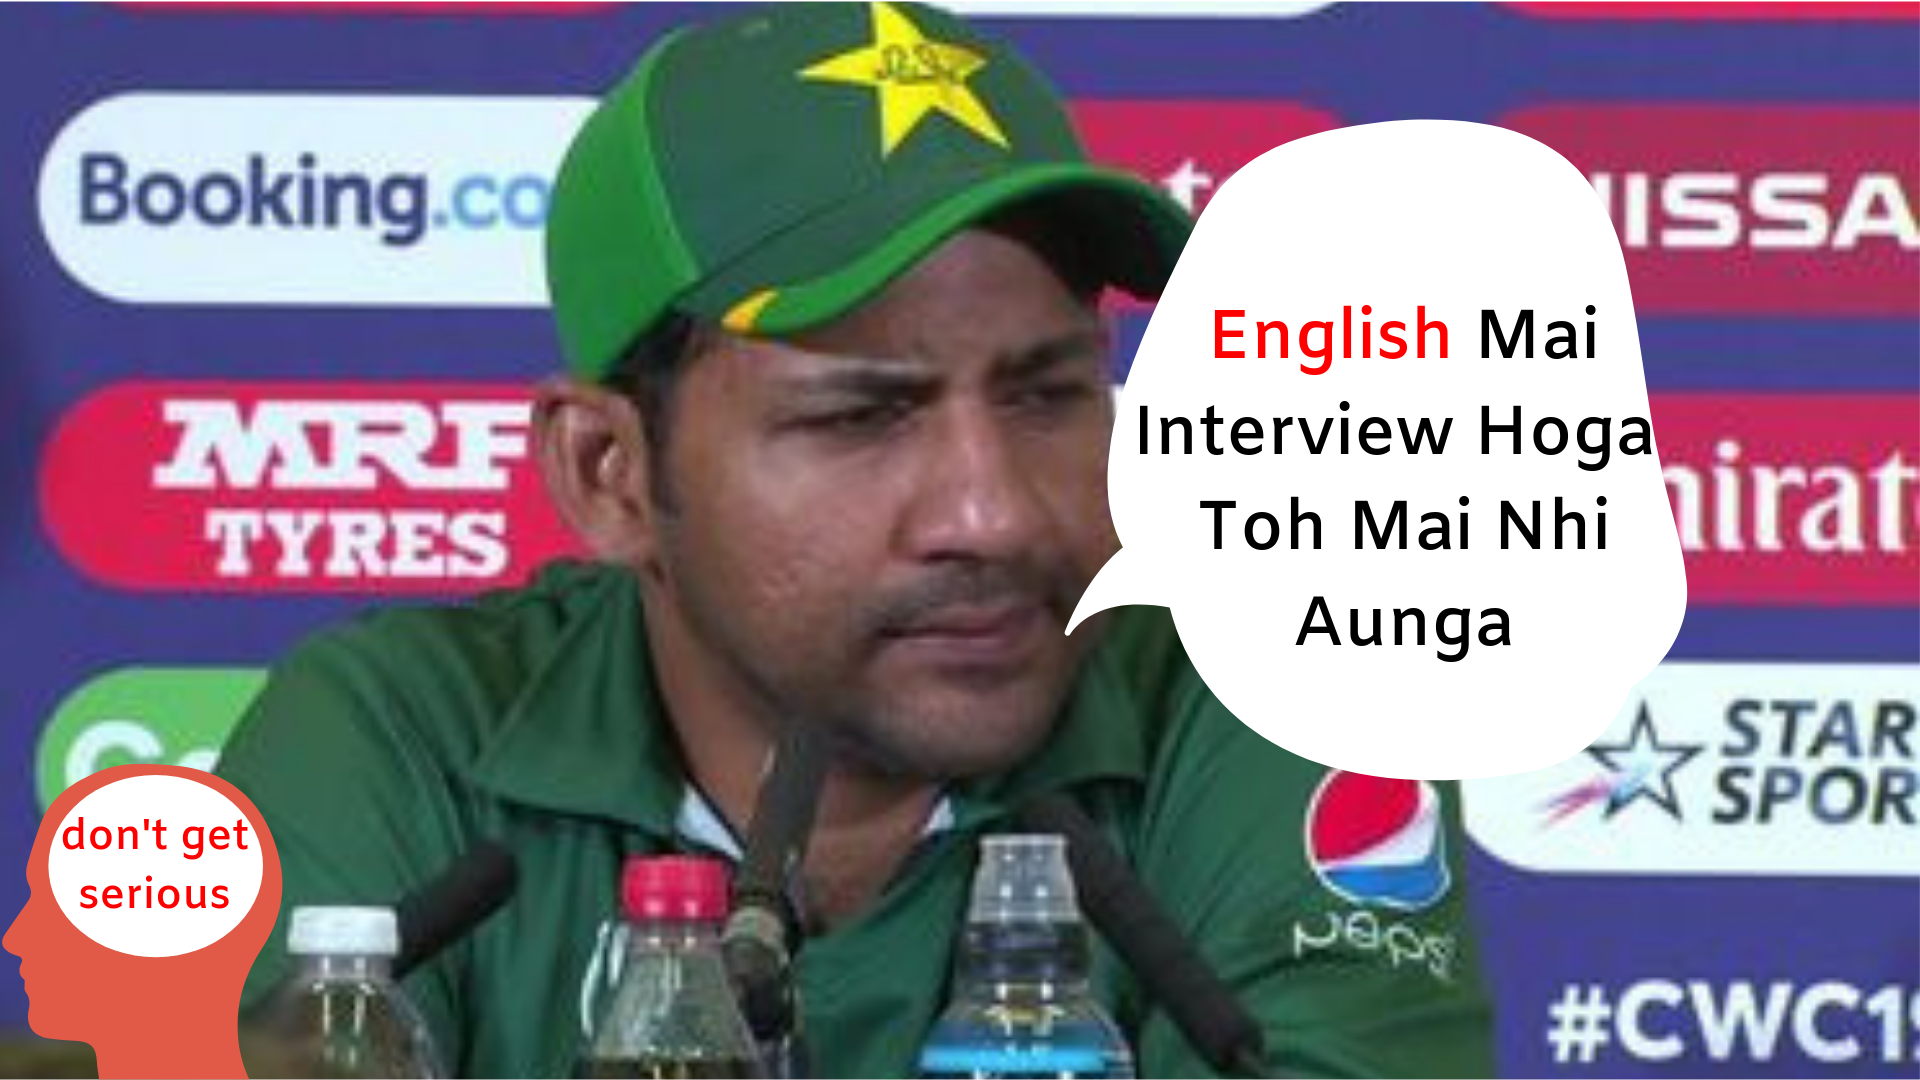 Famous Pakistani Cricketers Who Speak Good English